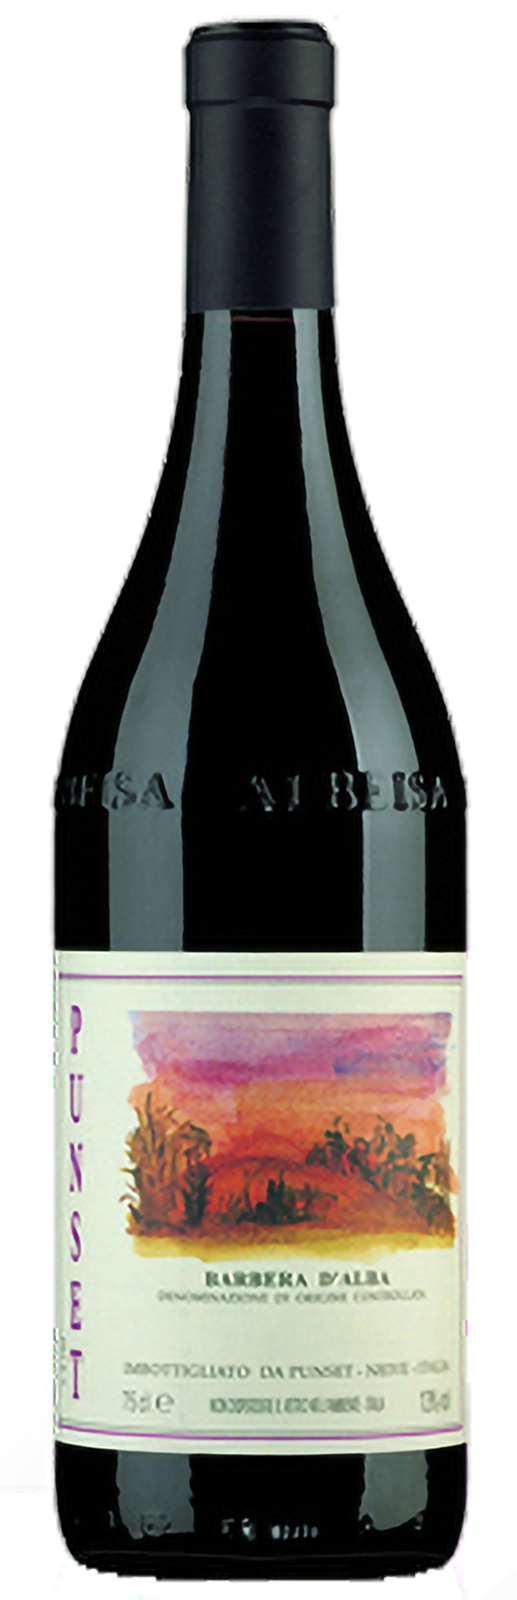 Bottle shot of 2017 Barbera d'Alba